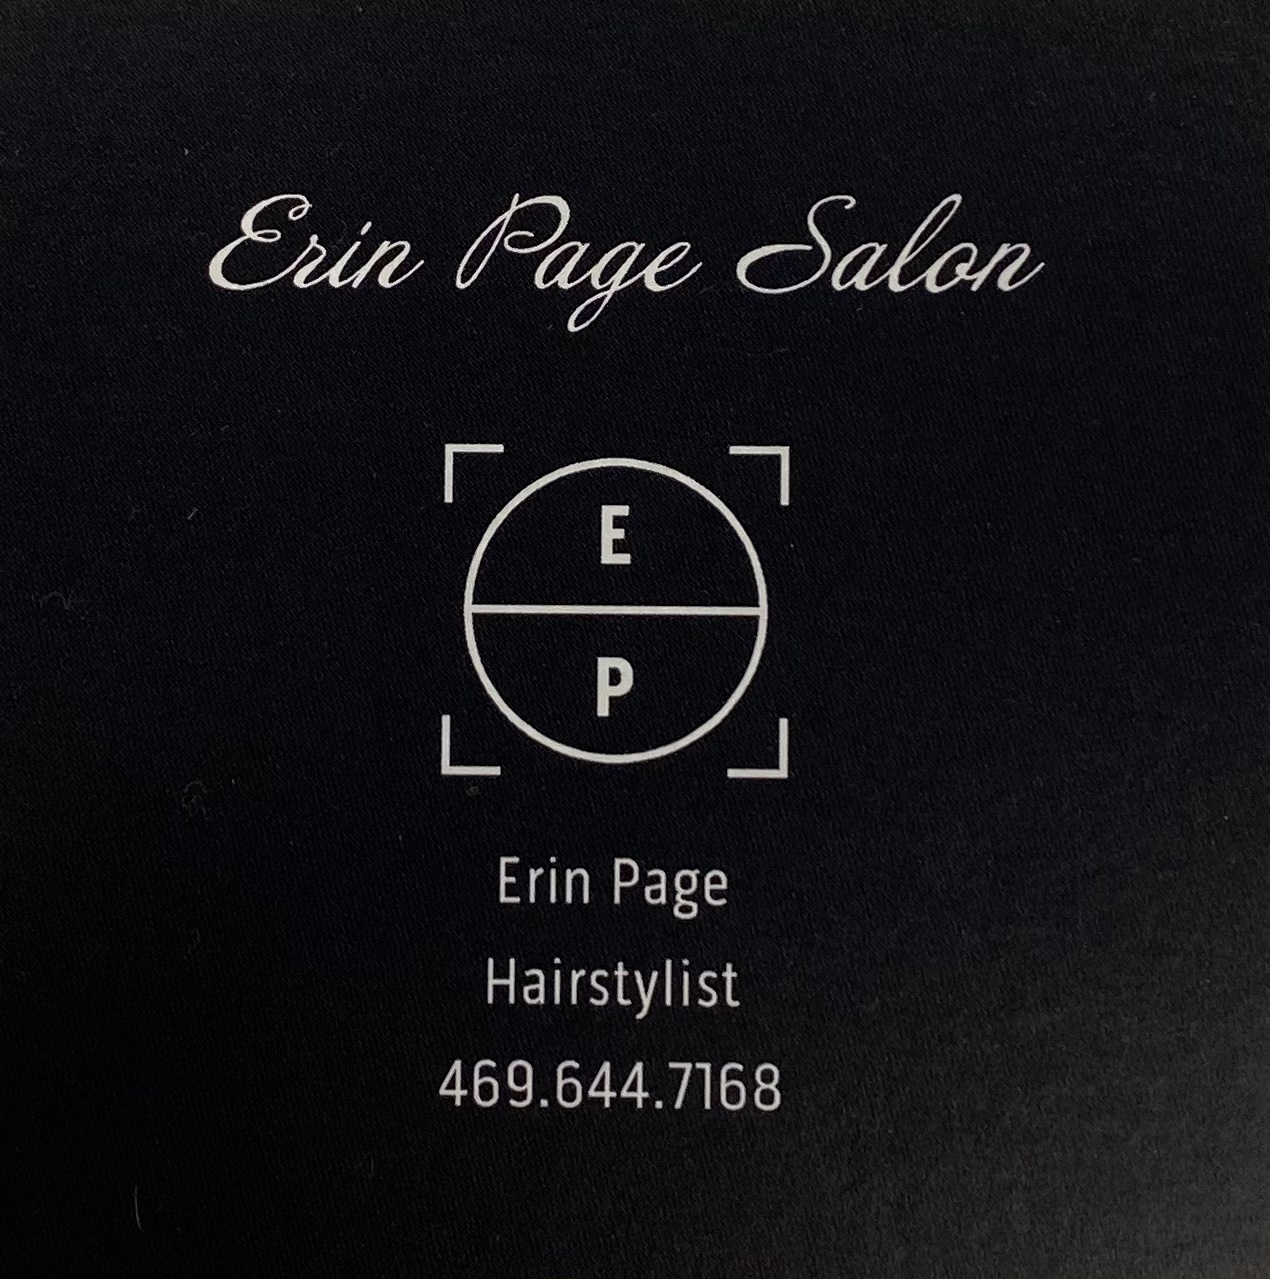 Erin Page Salon